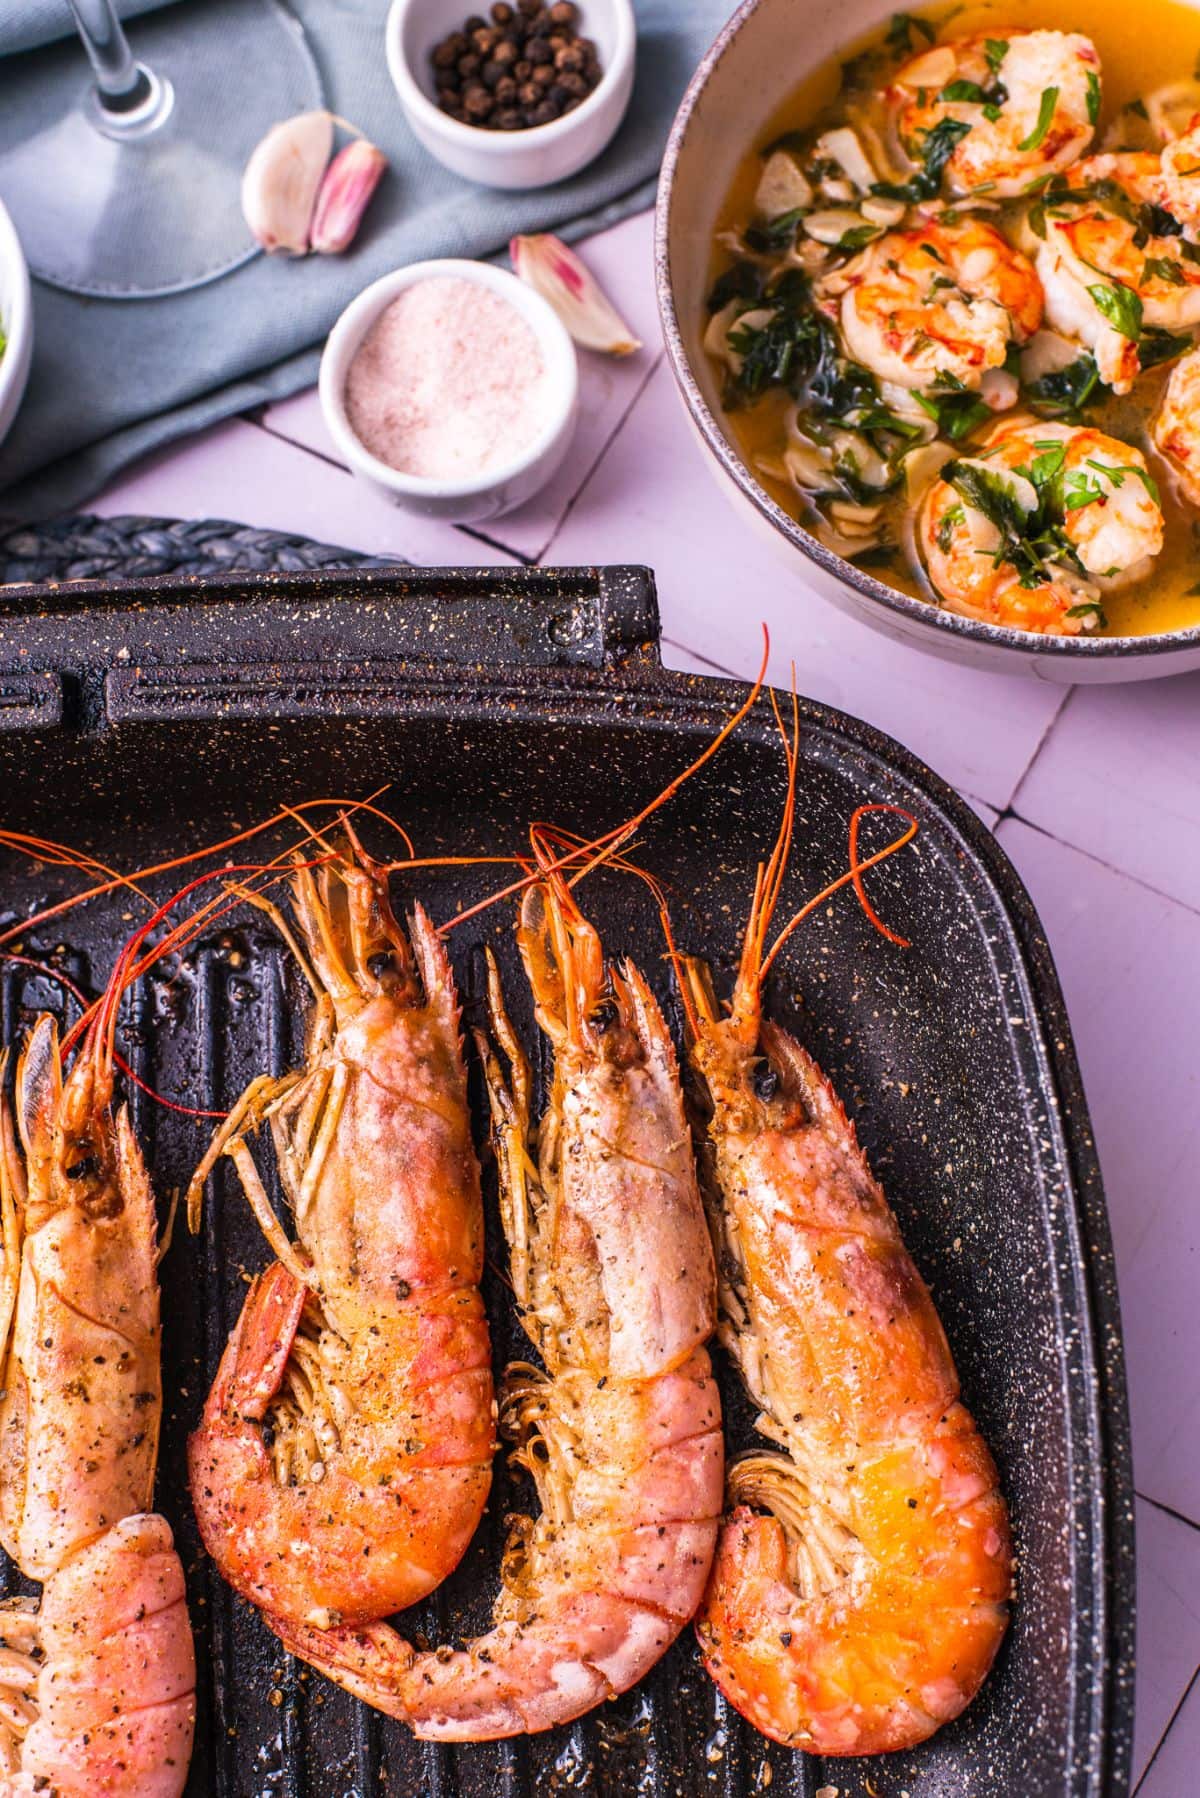 How to cook shrimp 5